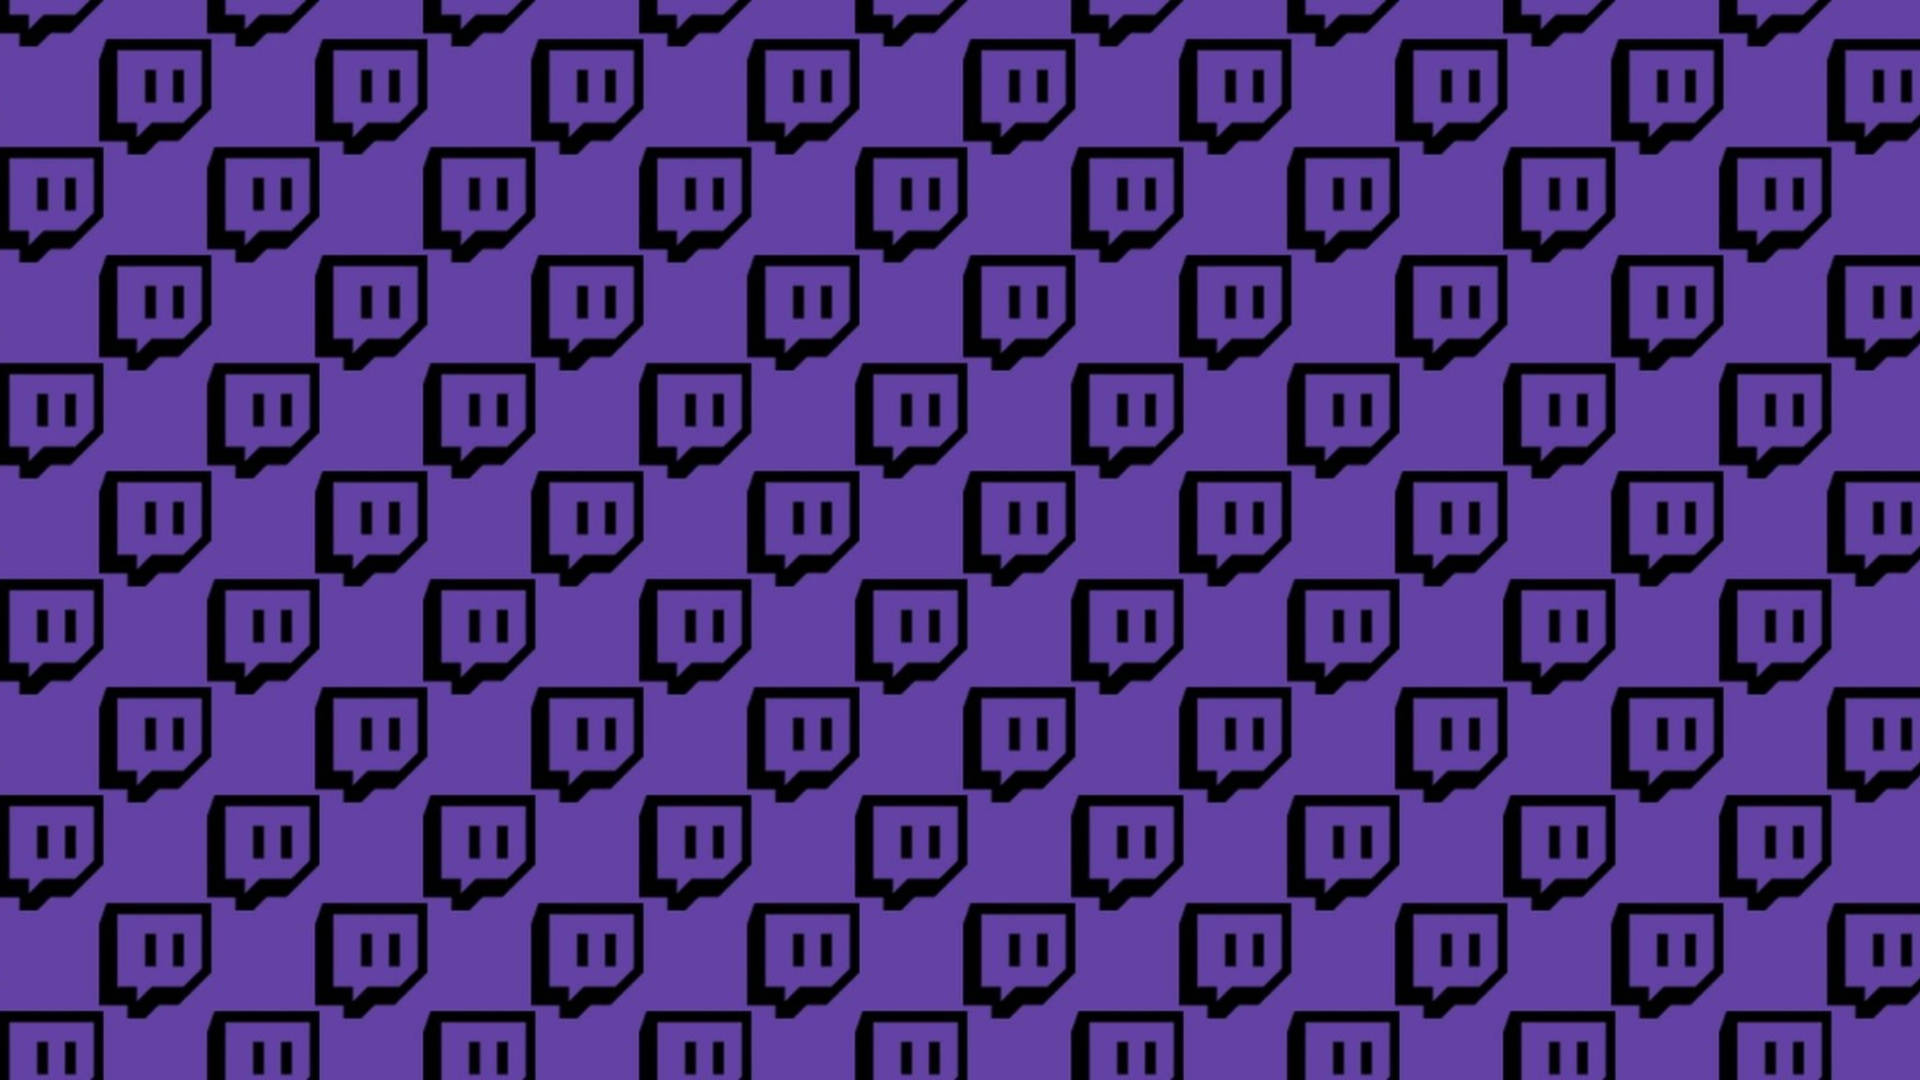 Twitch Icon Patterns Wallpaper